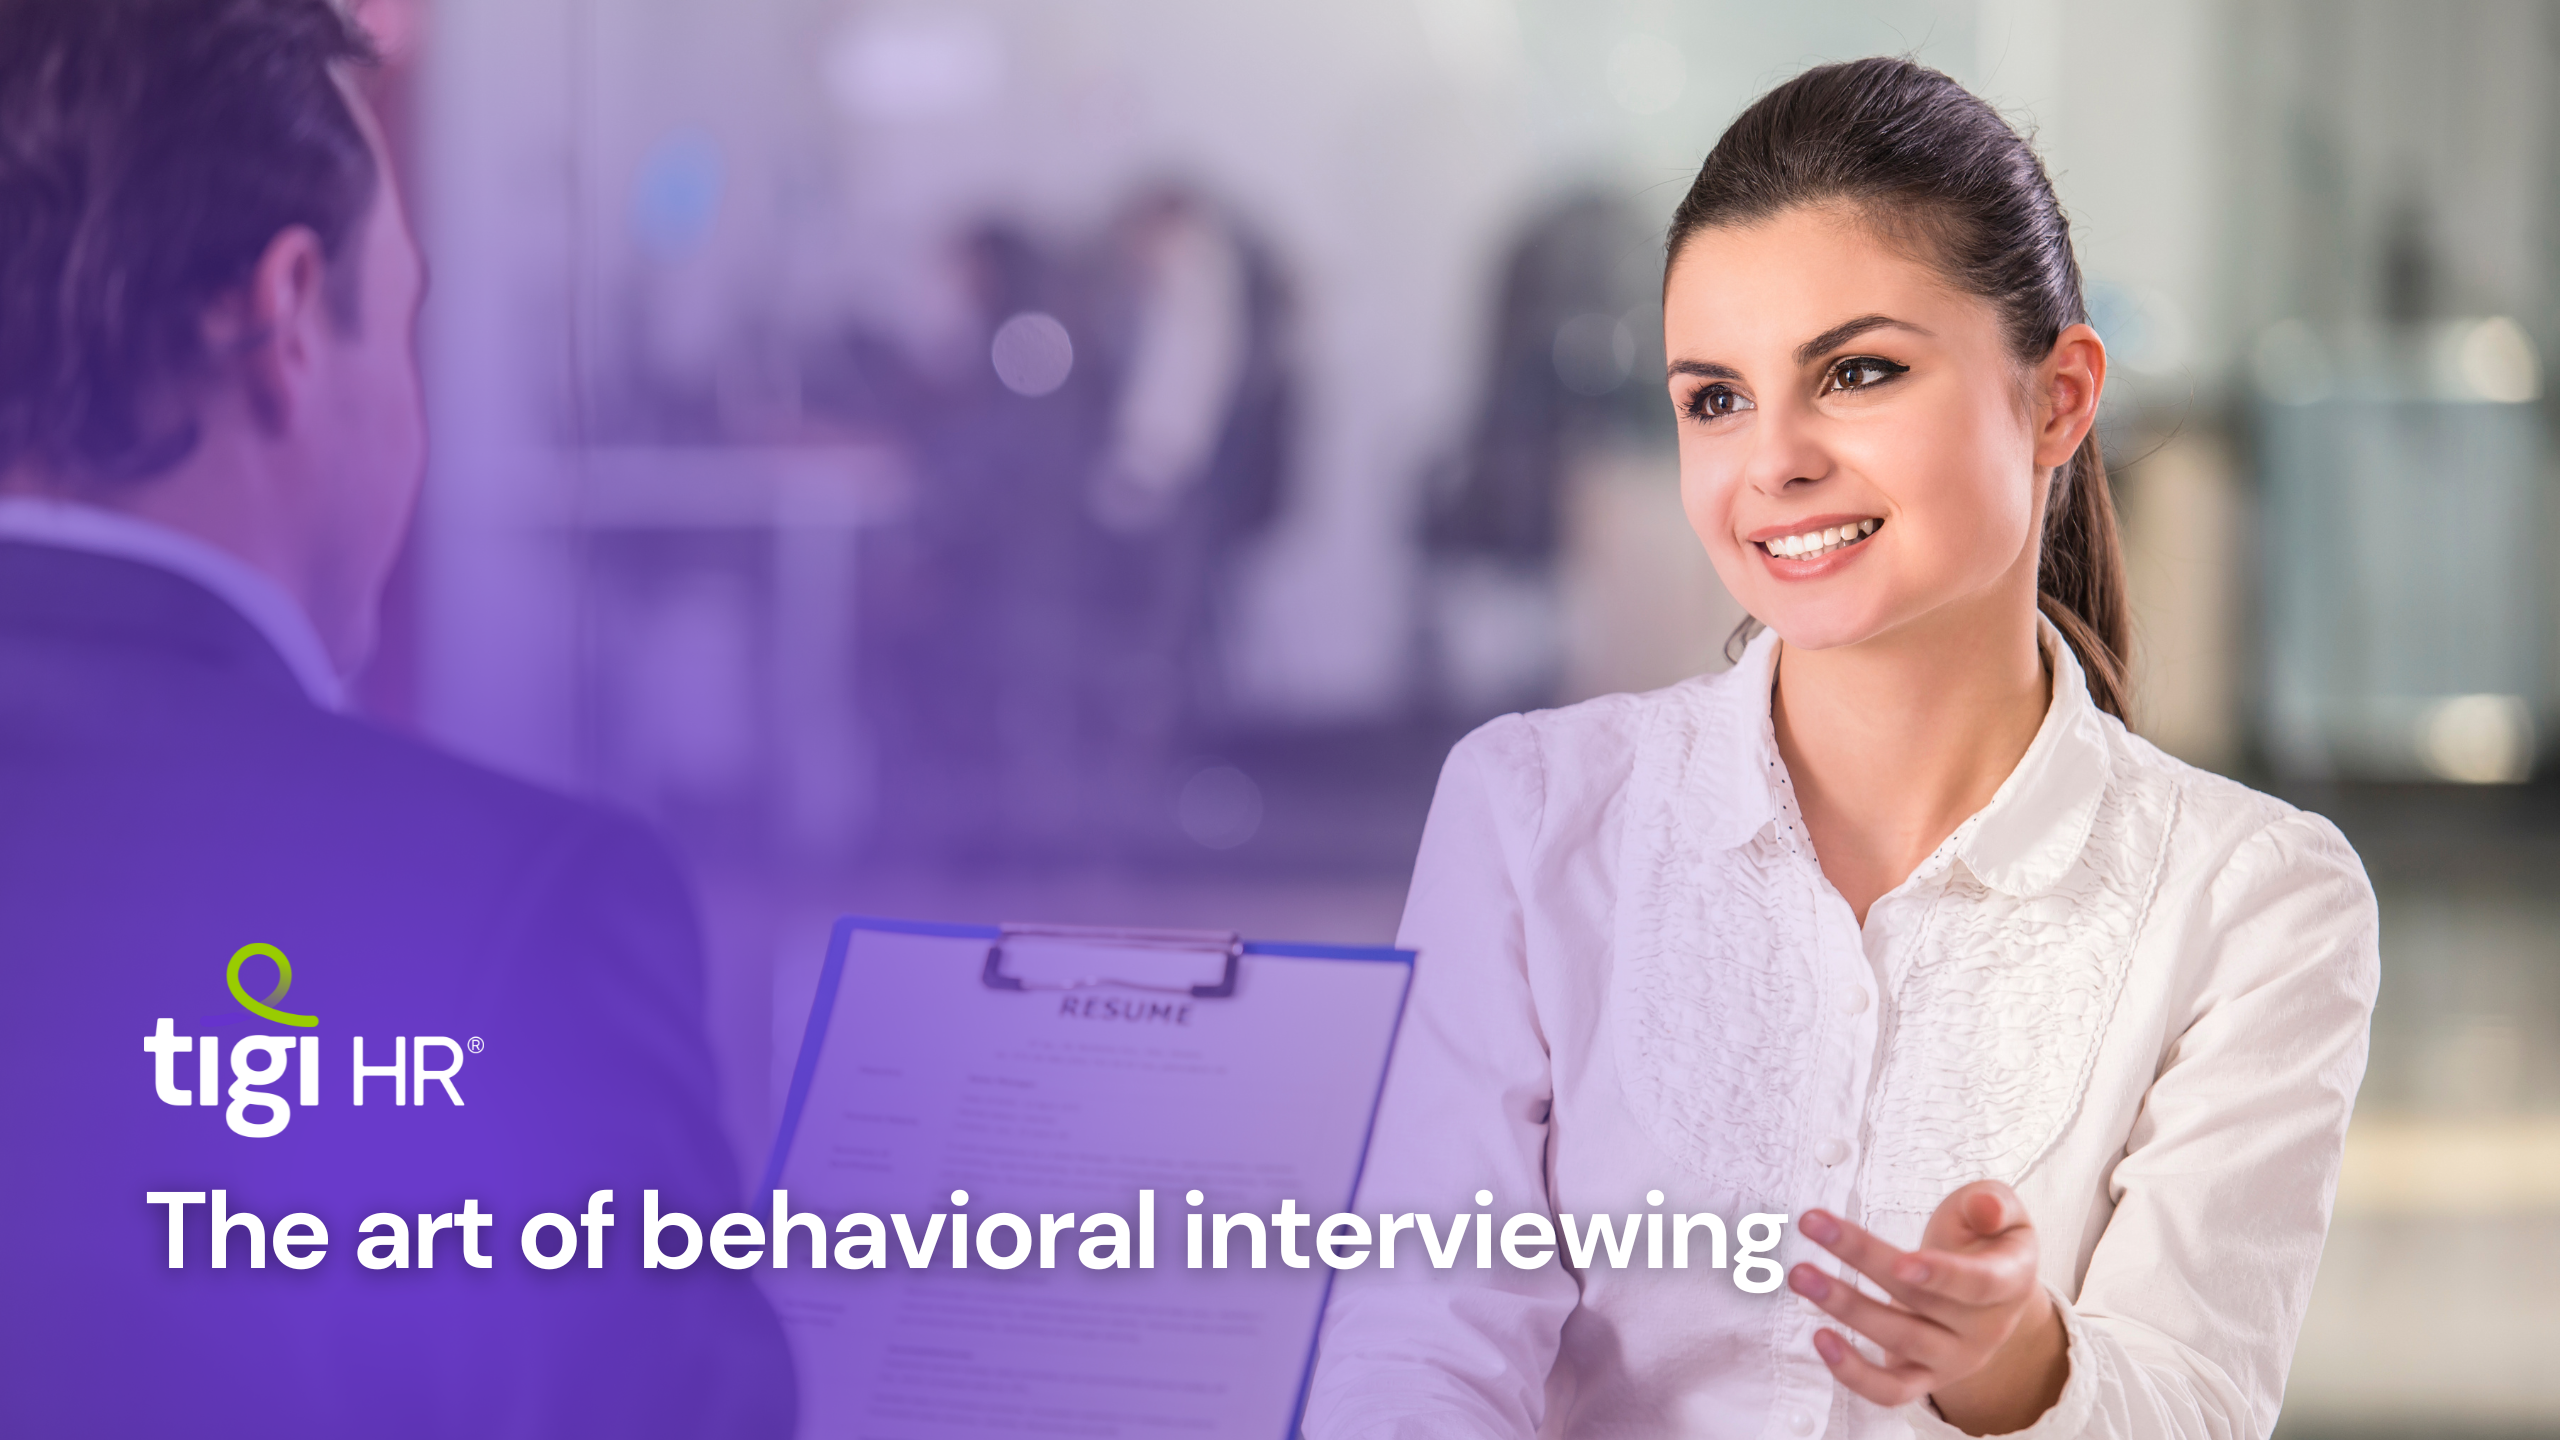 The art of behavioral interviewing. Find jobs at TIGI HR.